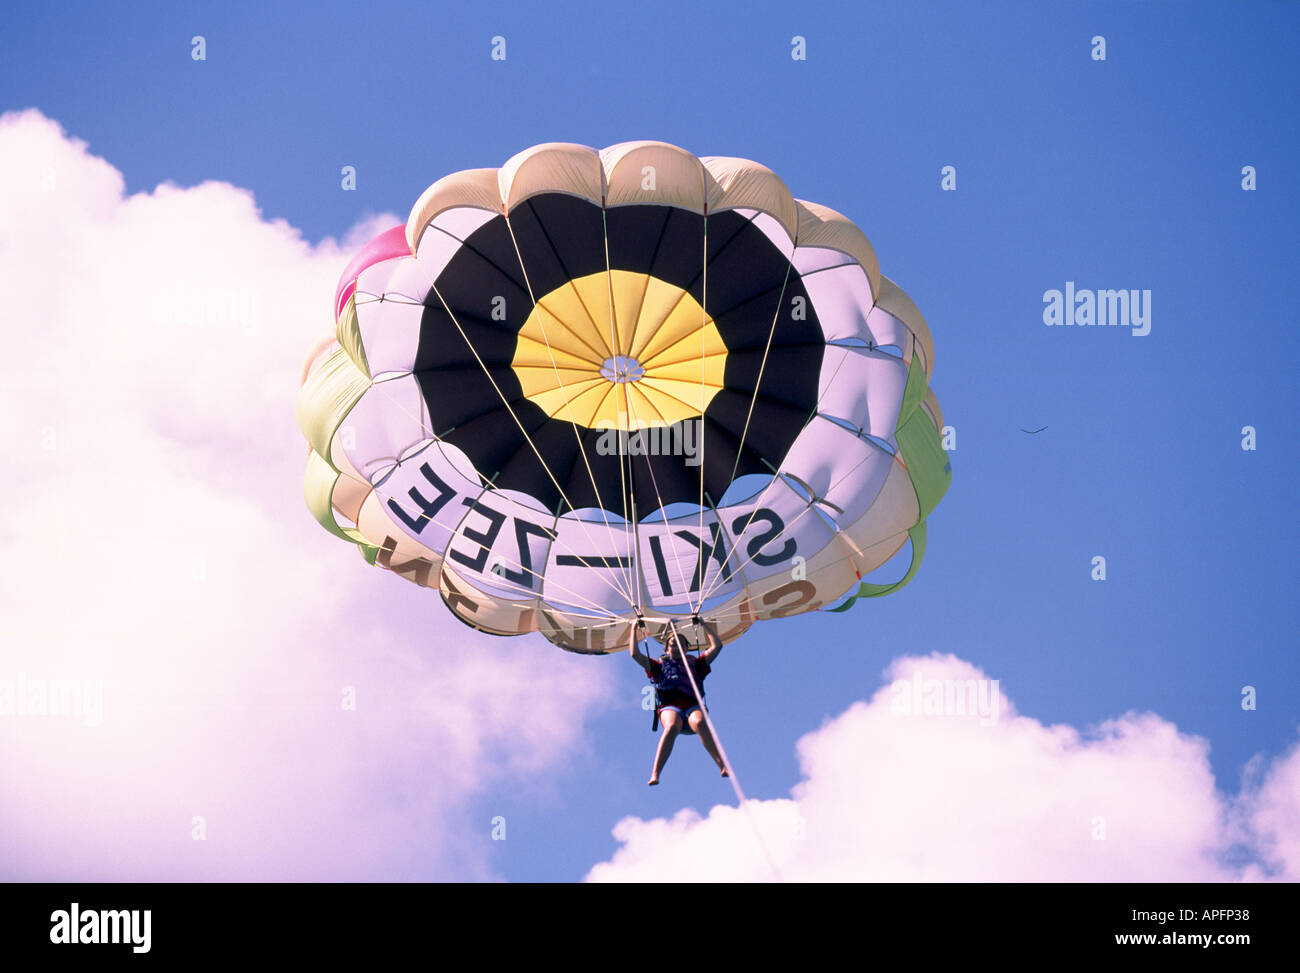 Parasailing Fallschirm Mitte Luft gegen Himmel Stockfoto